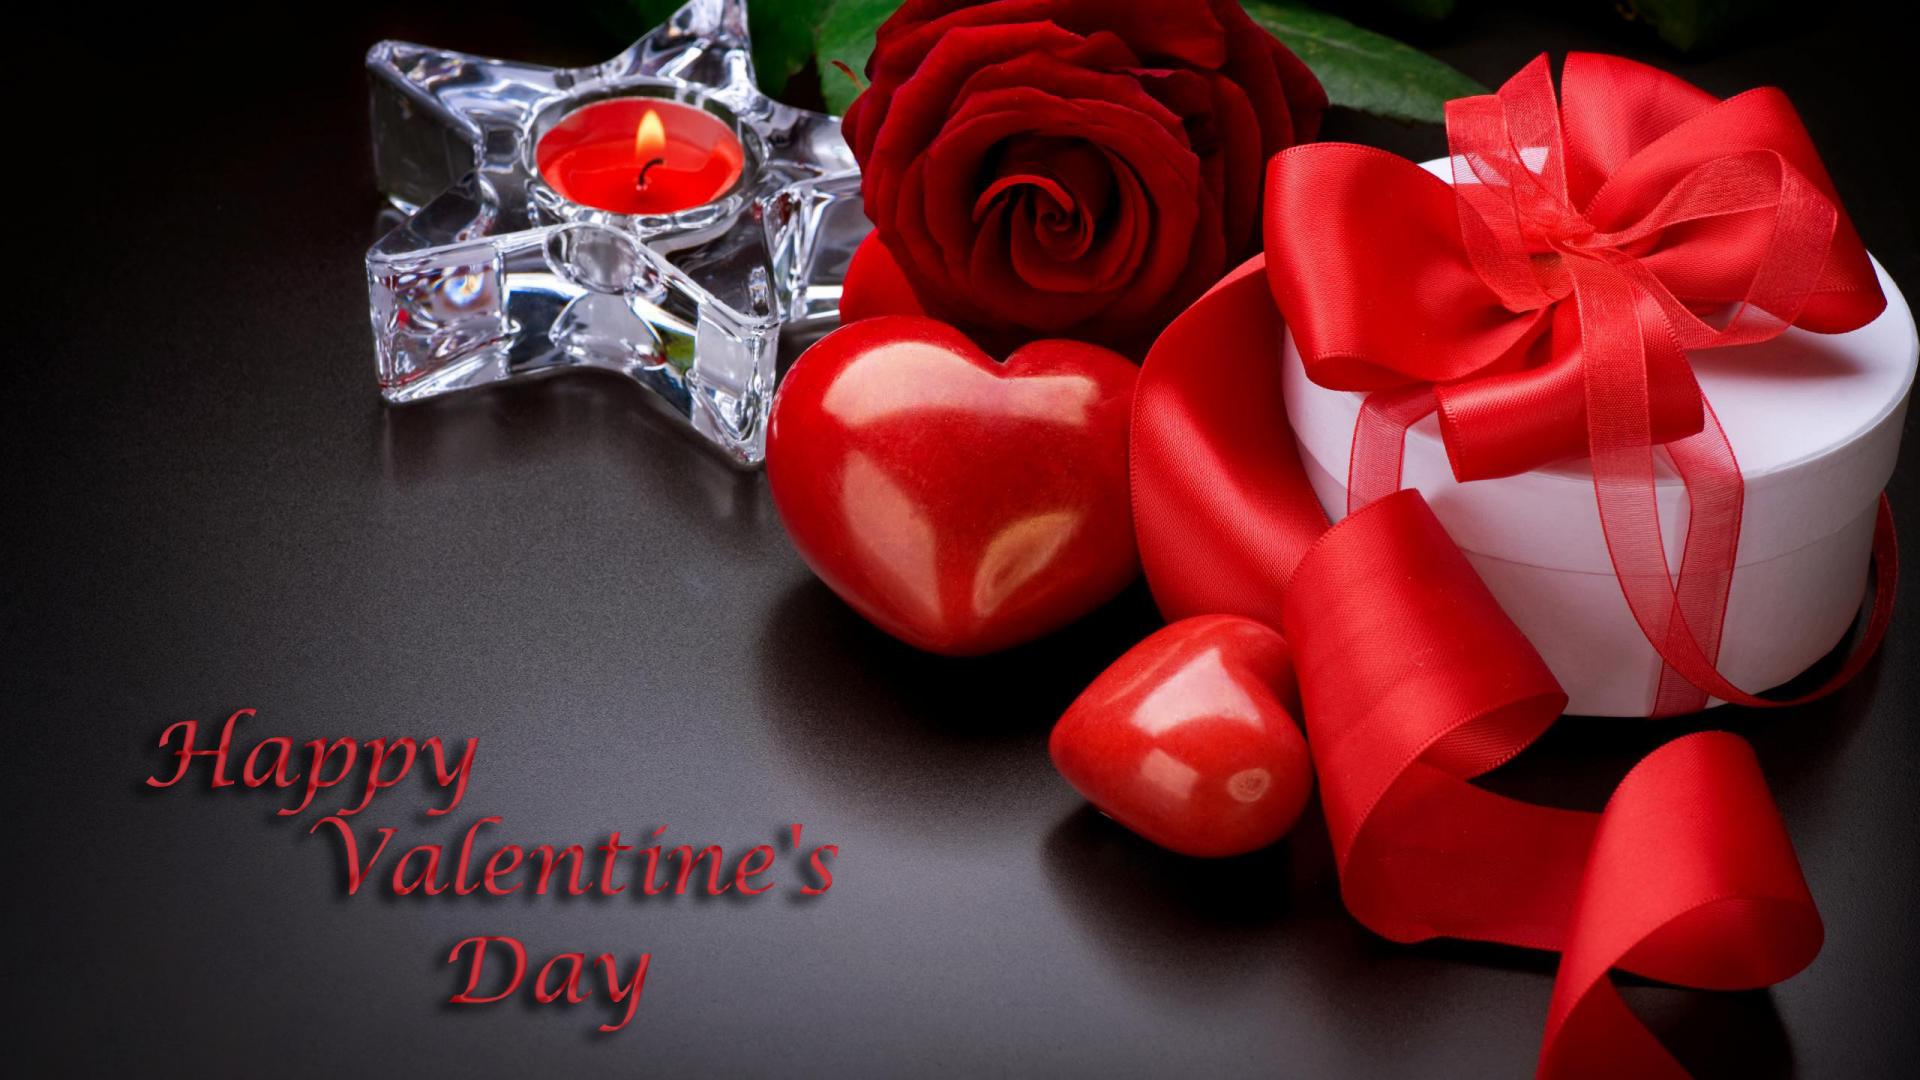 Happy Valentine Day HD Wallpaper of Love   hdwallpaper2013com 1920x1080